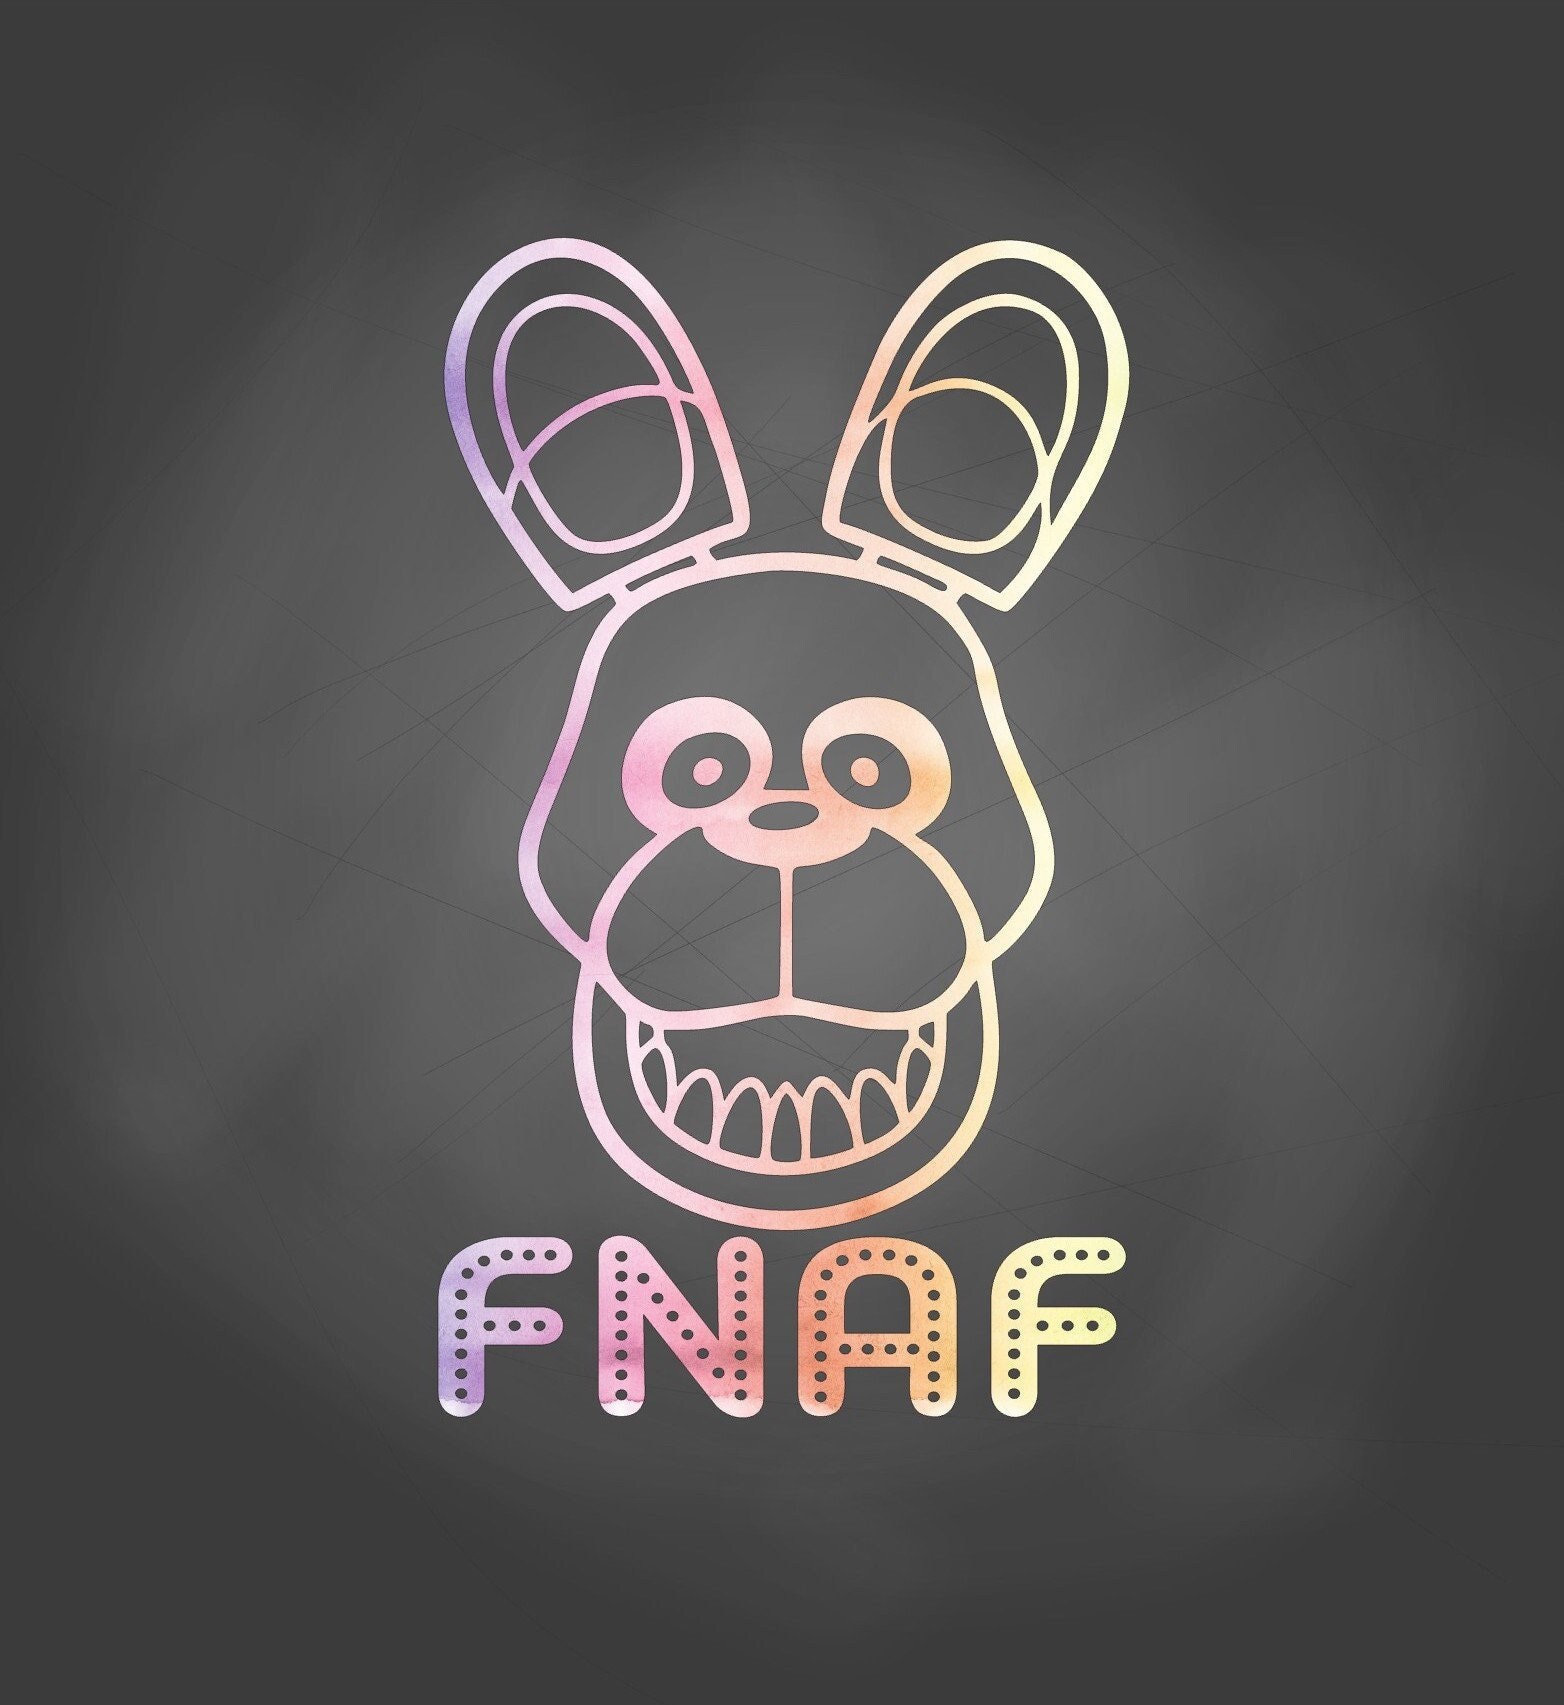 Freddy Fazbear Fnaf SVG / DXF / PNG File Cutting File for -  Denmark